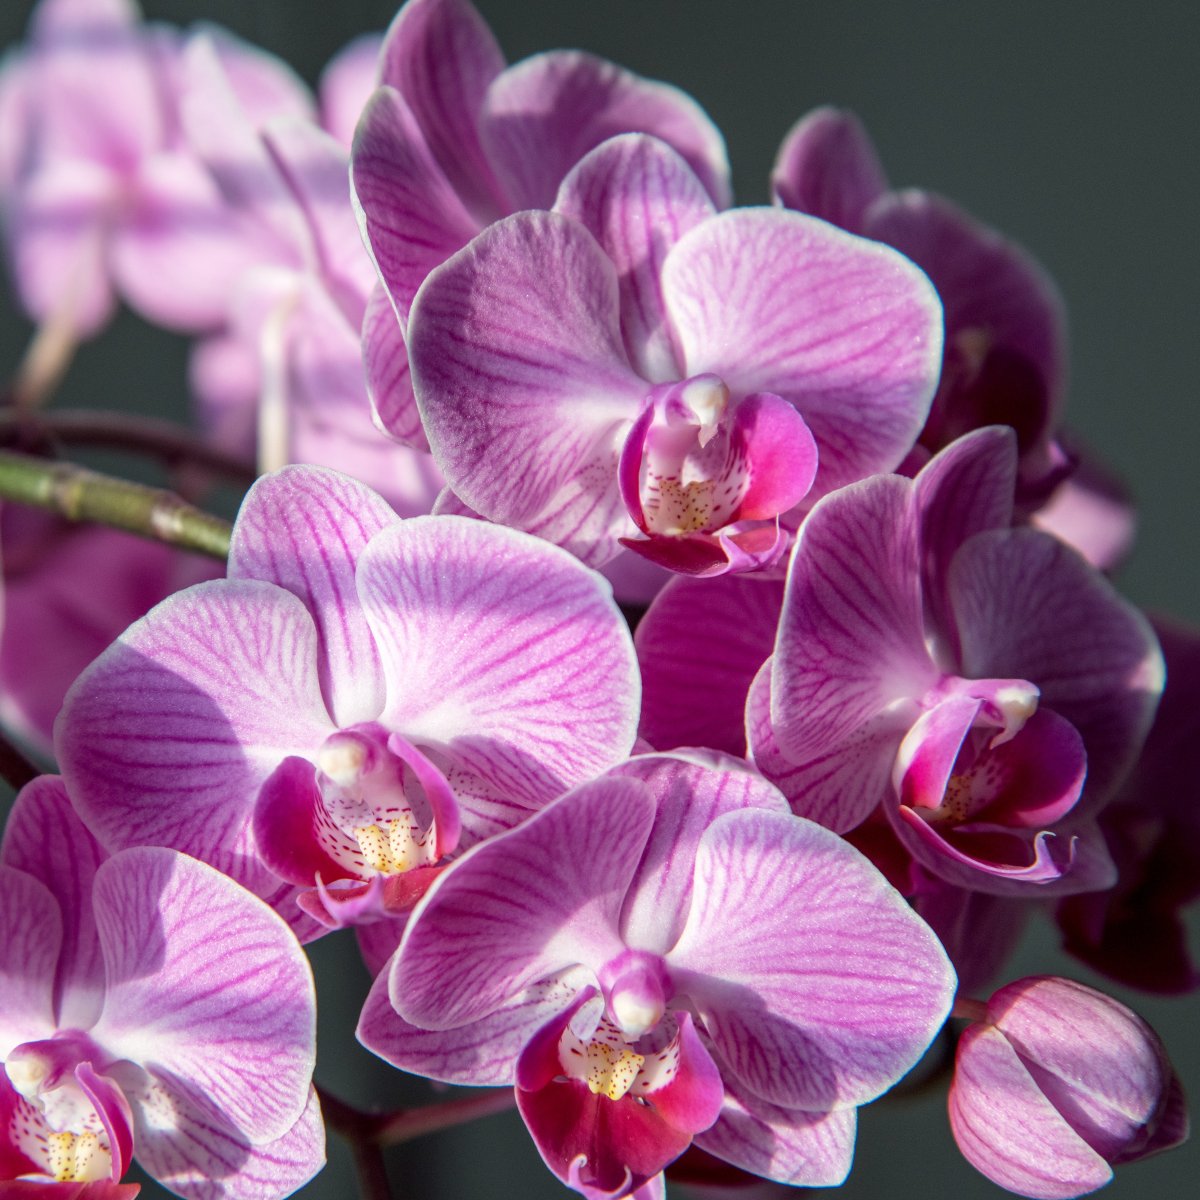 Phalaenopsis ornamental flower pictures